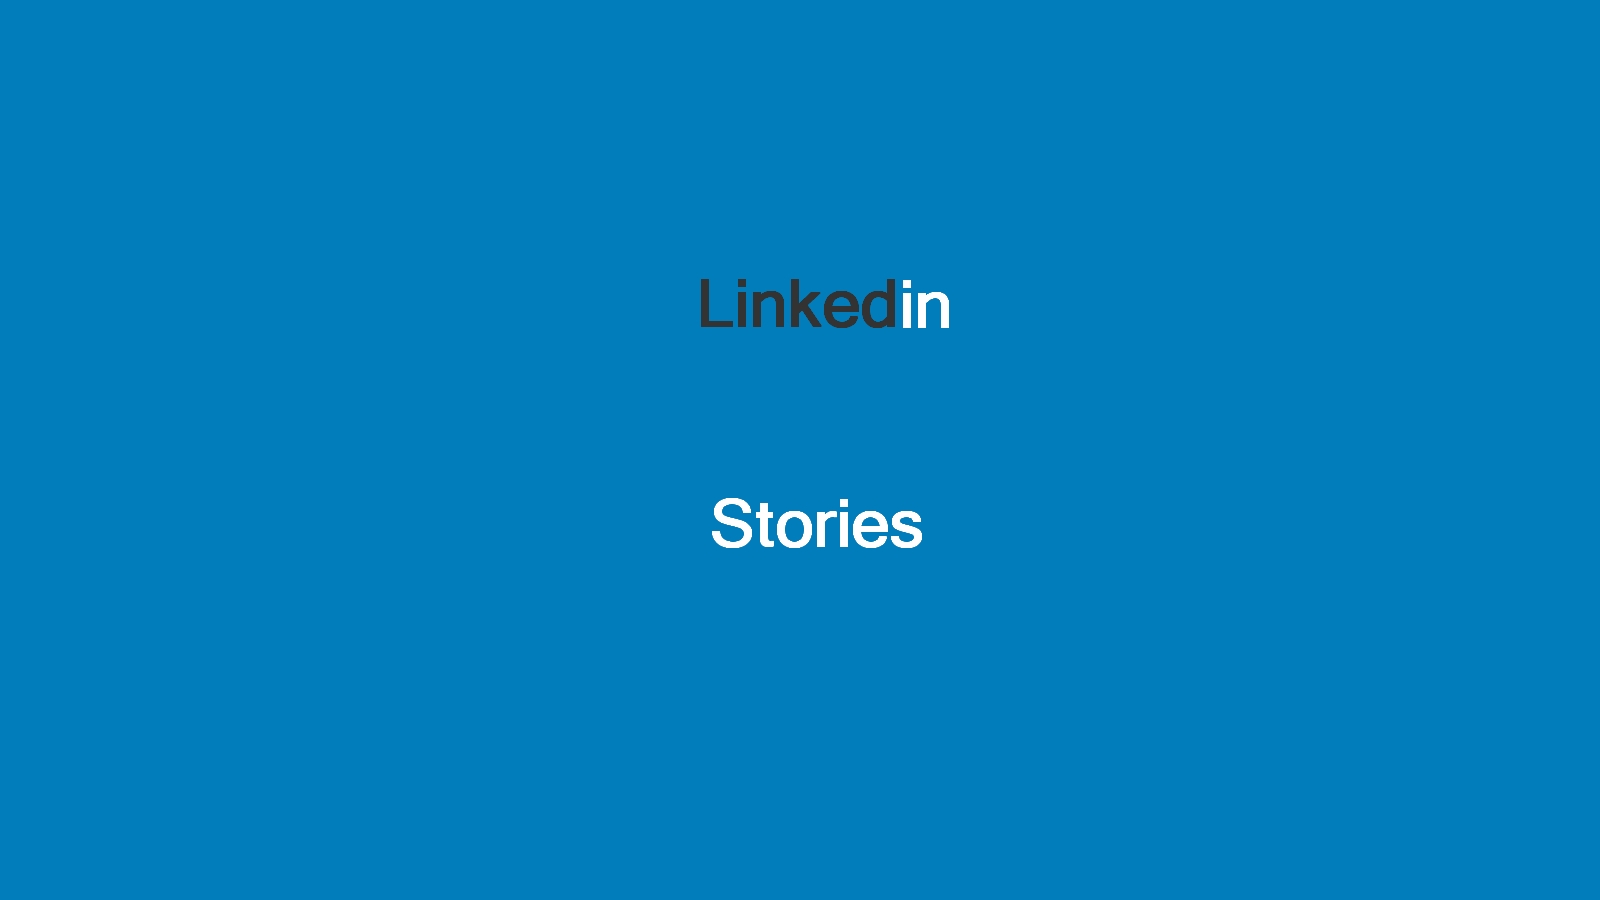 Featured LinkedIn stories